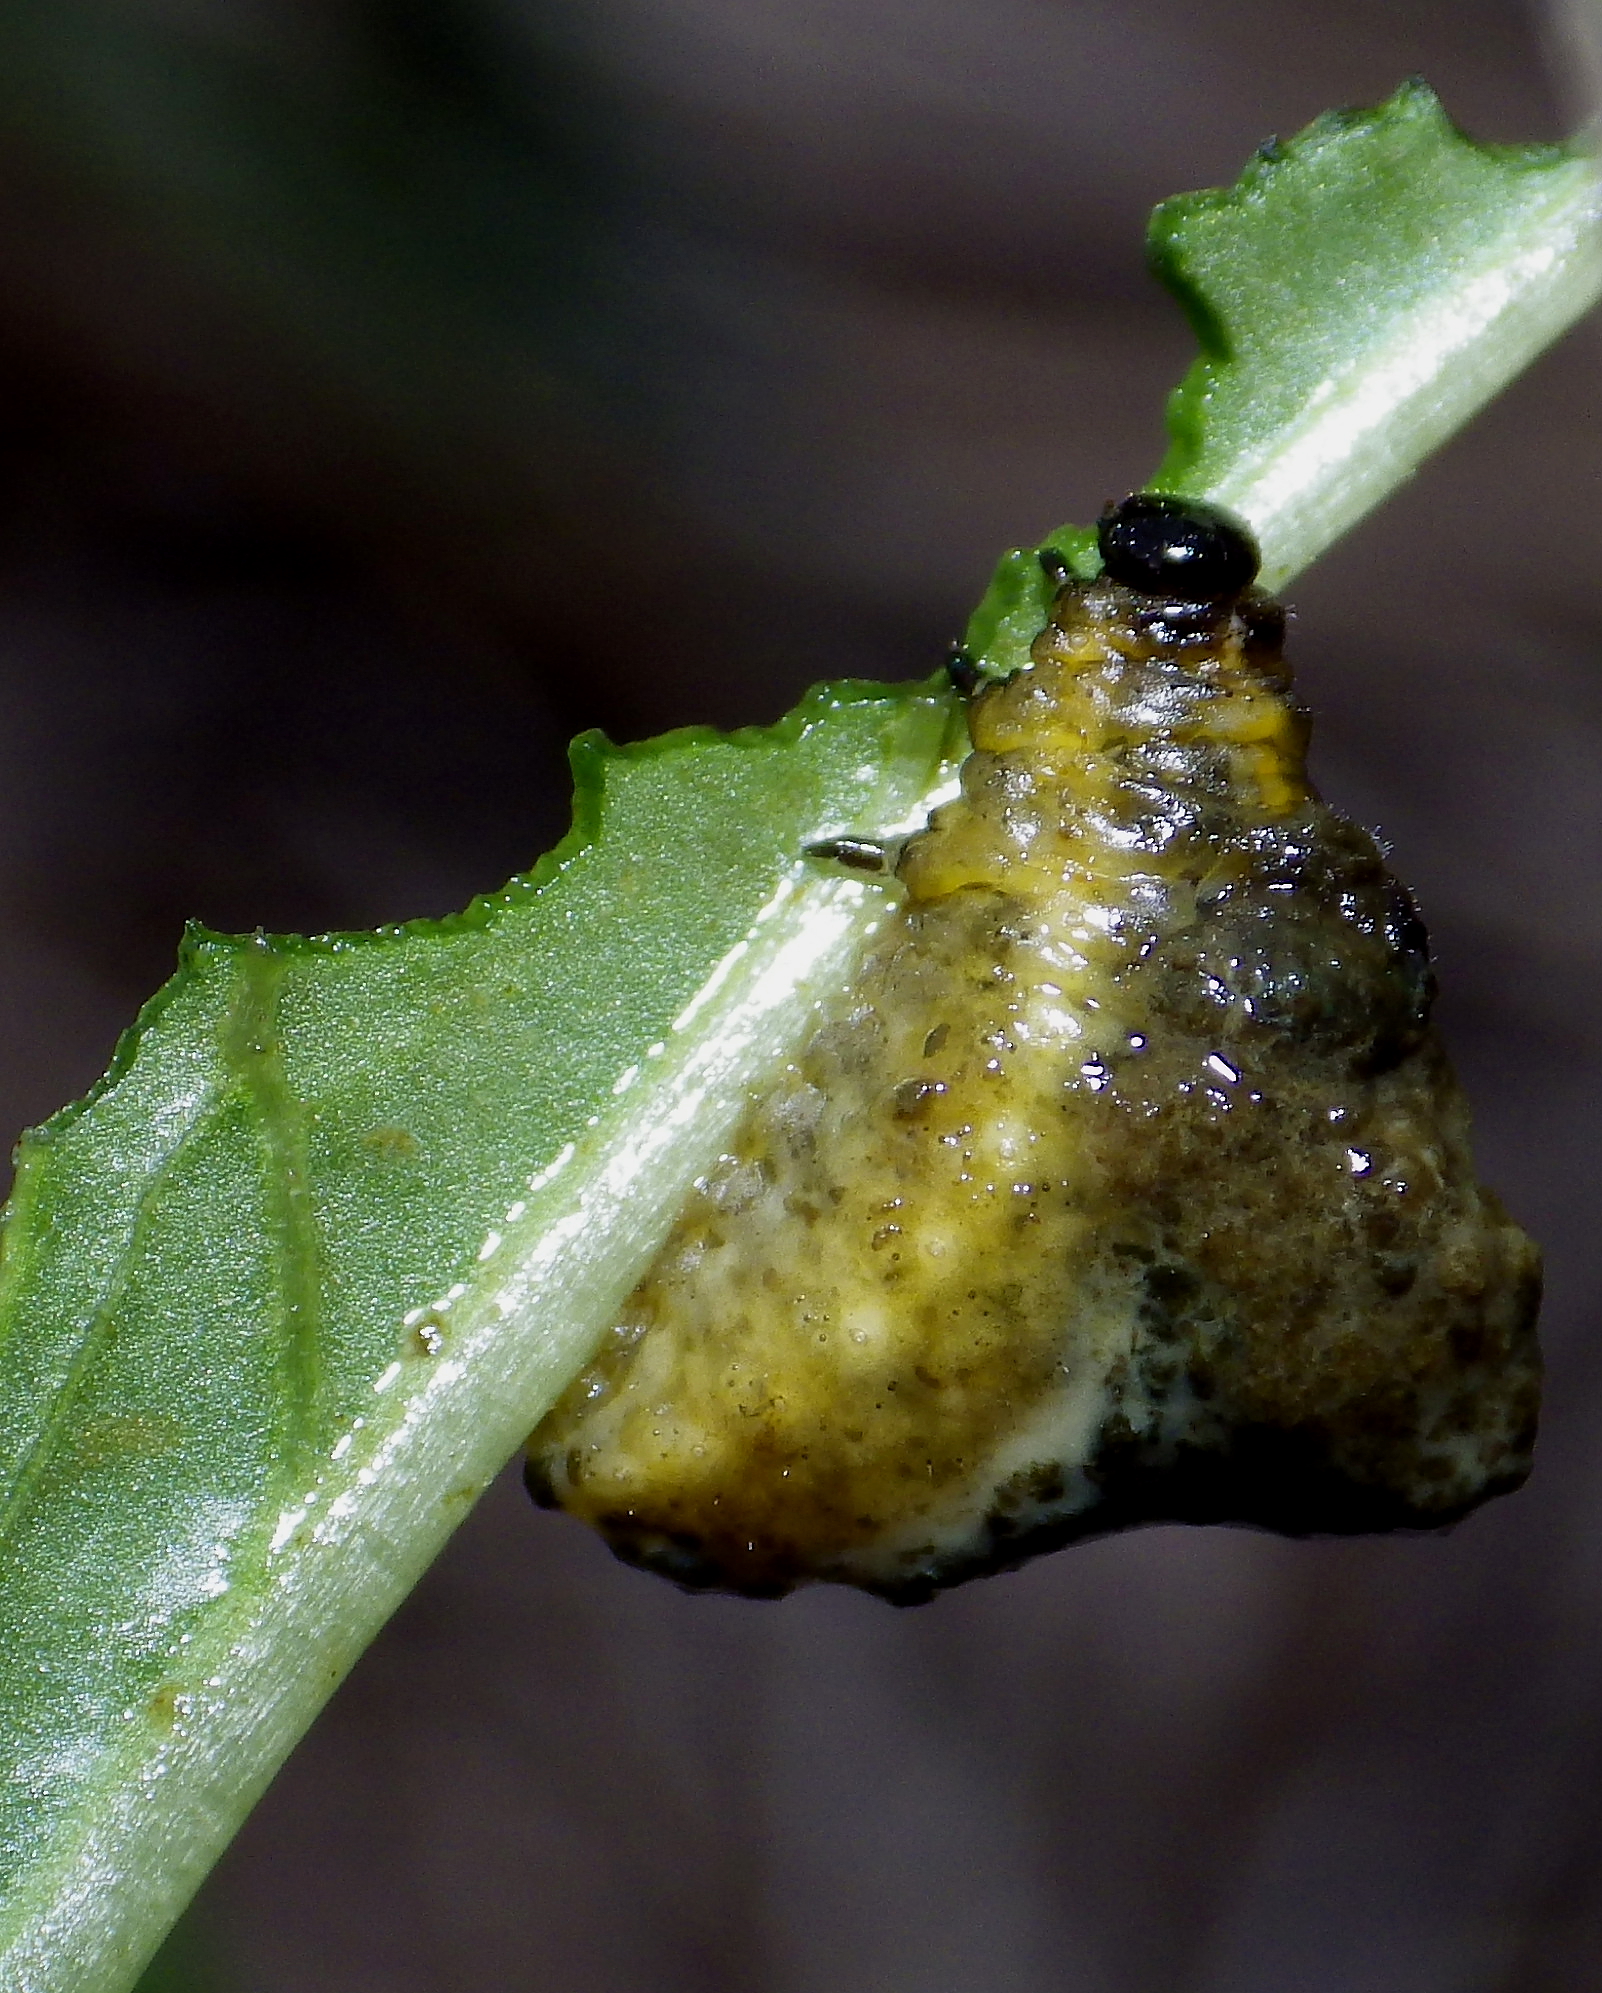 a tiny bug is on a small leaf